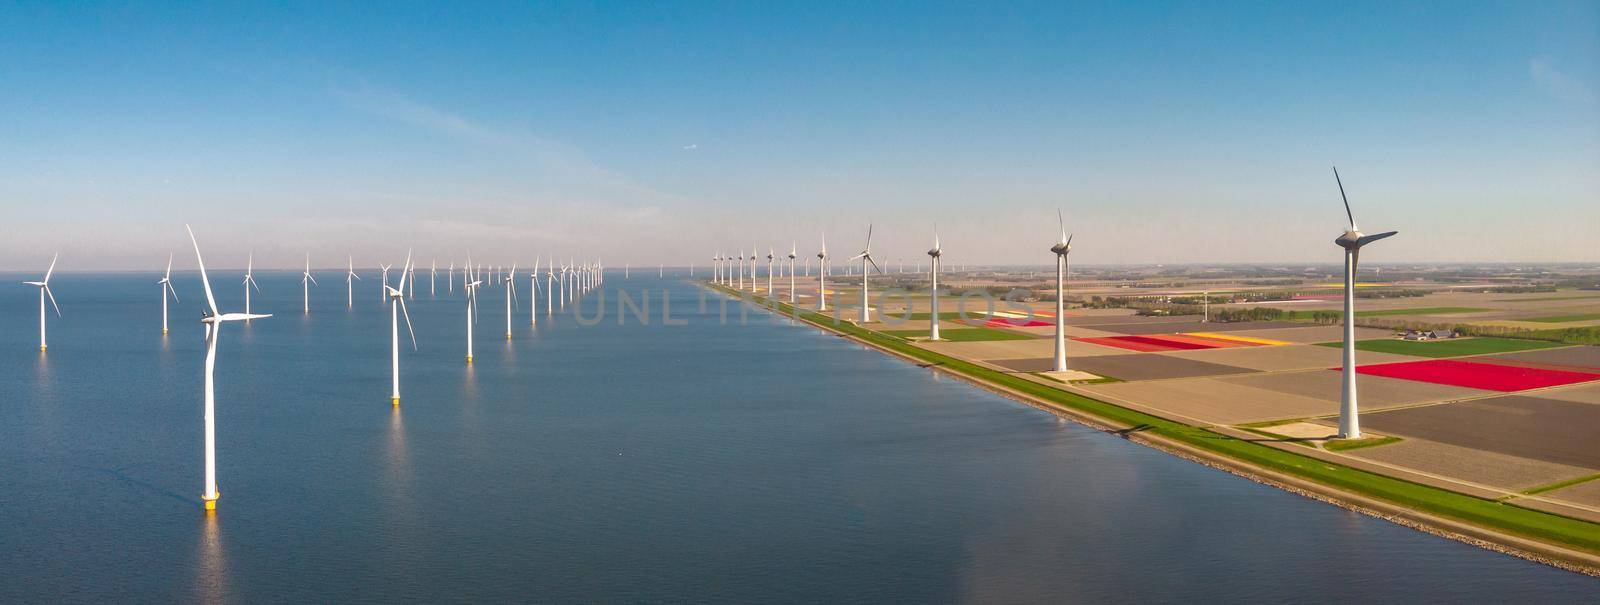 Huge windmill turbines, Offshore Windmill farm in the ocean Westermeerwind park , windmills isolated at sea on a beautiful bright day Netherlands Flevoland Noordoostpolder by fokkebok